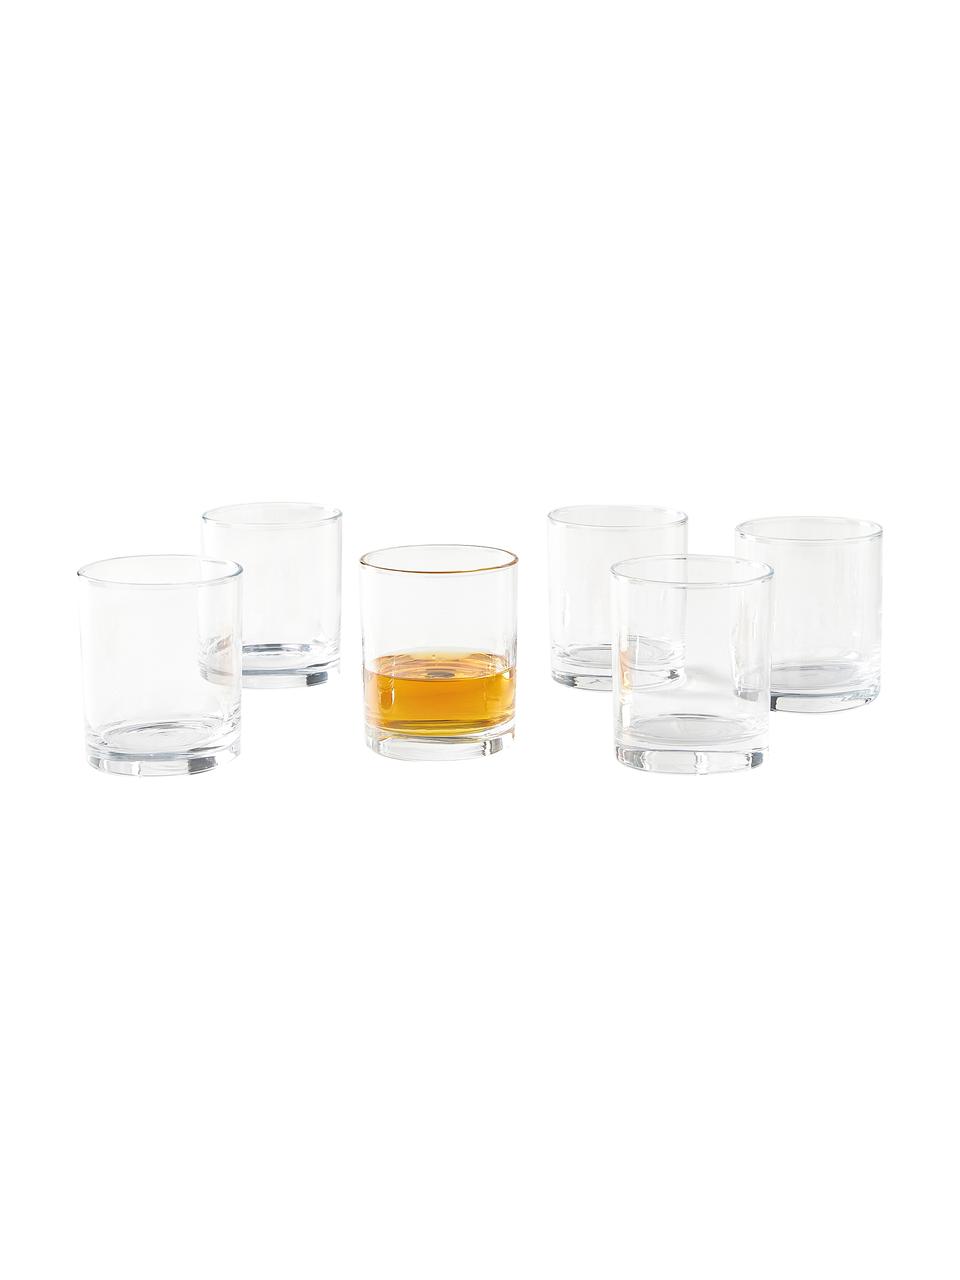 Whiskyglazen Princesa, 6 stuks, Glas, Transparant, Ø 8 x H 9 cm, 310 ml